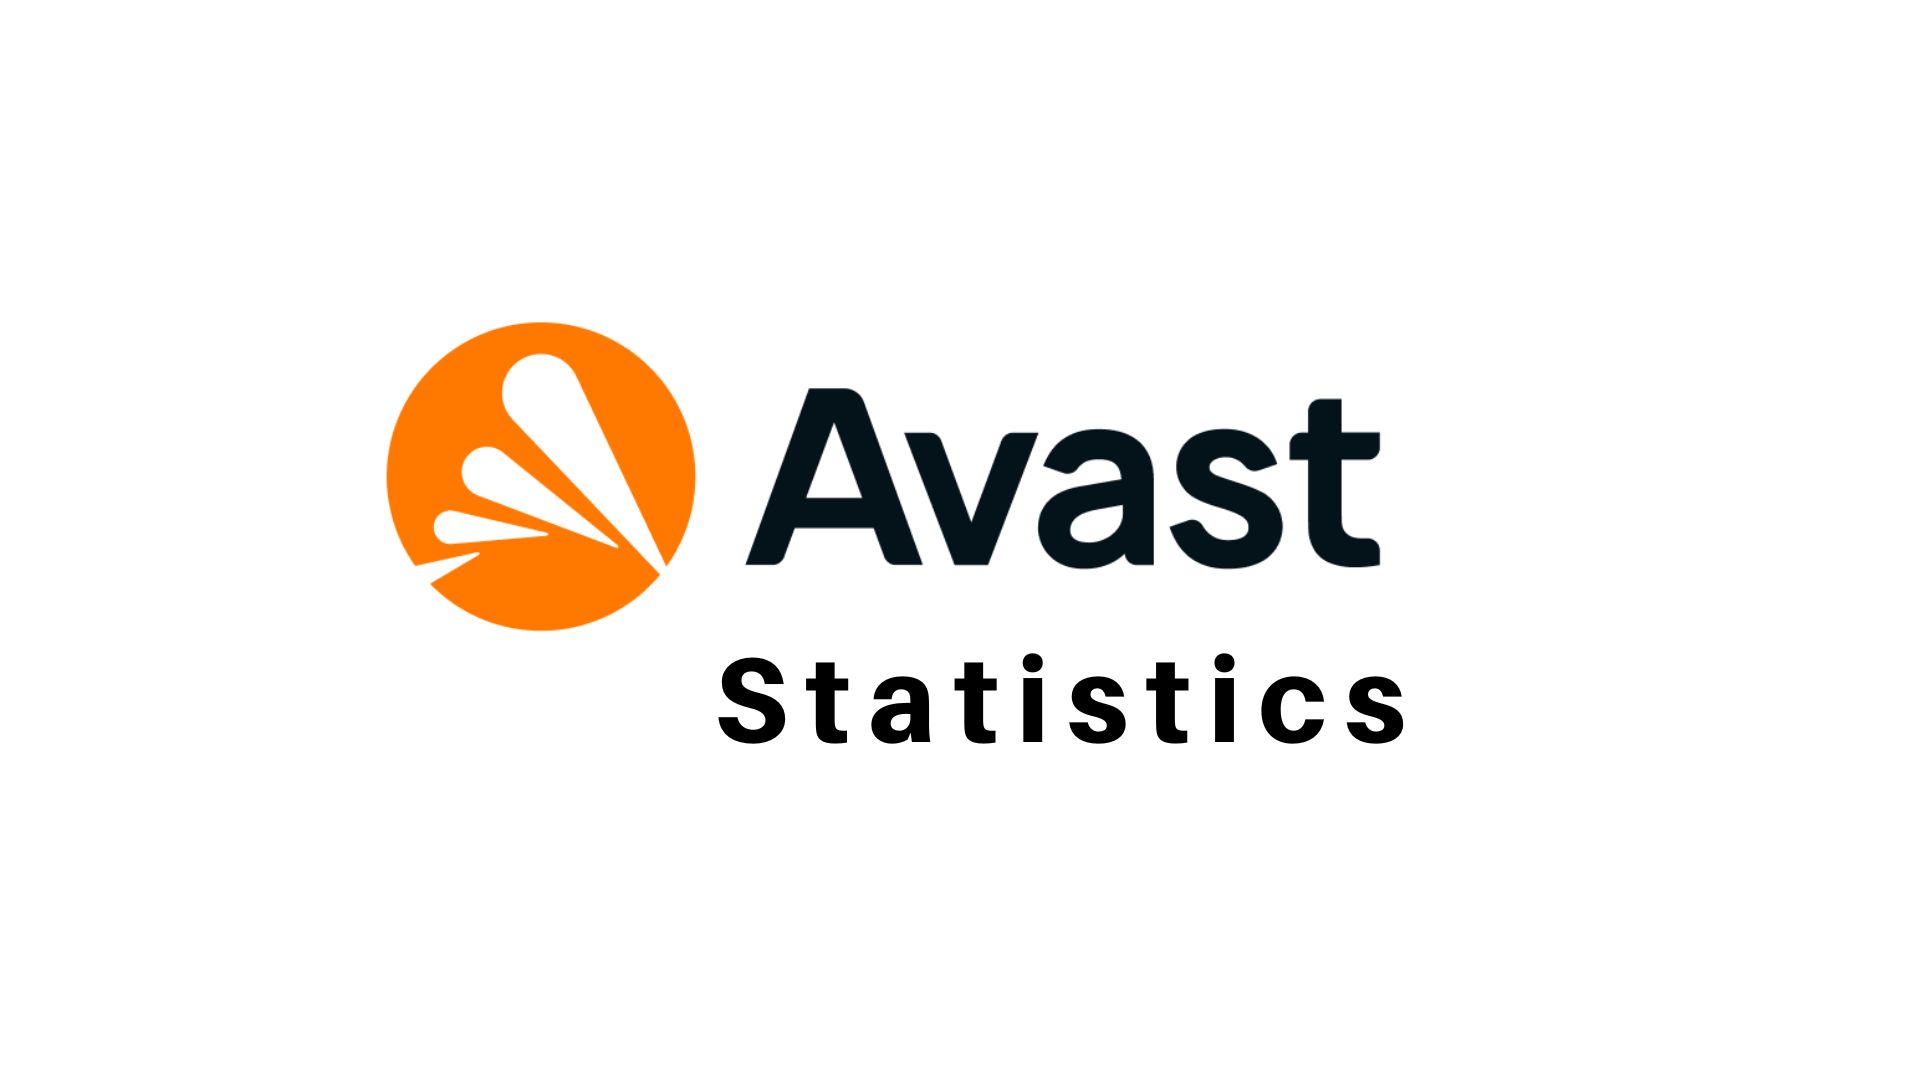 Avast Antivirus Statistics, Traffic Analytics, Market Share and Facts